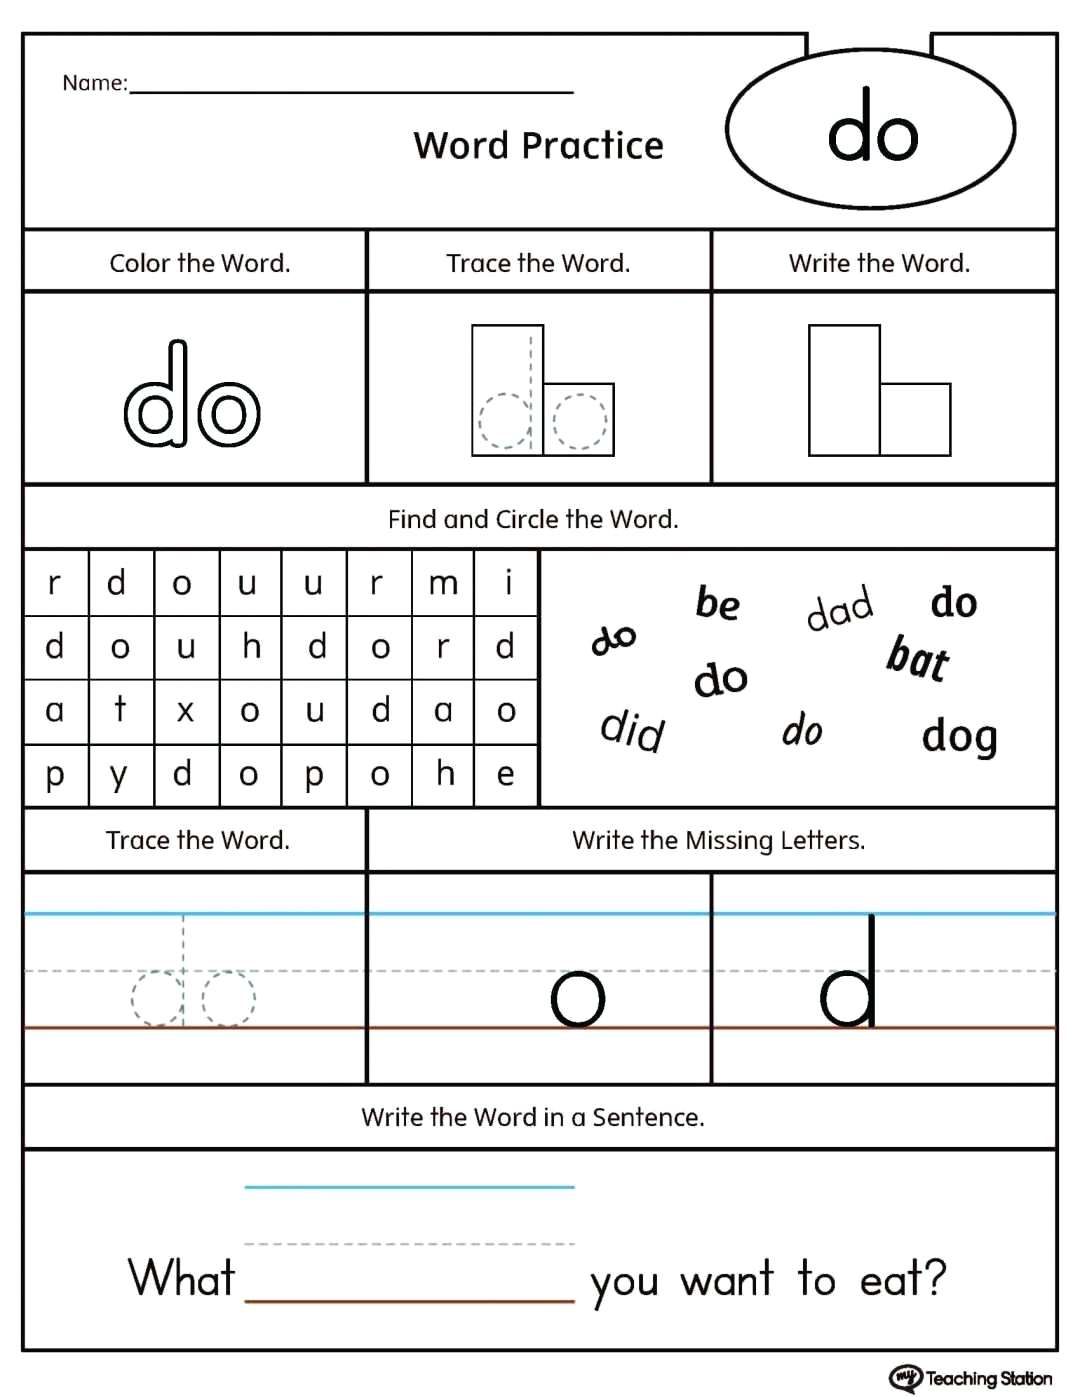 Free Literacy Worksheets For Kindergarten Letter S Practice within Letter S Worksheets For Kindergarten